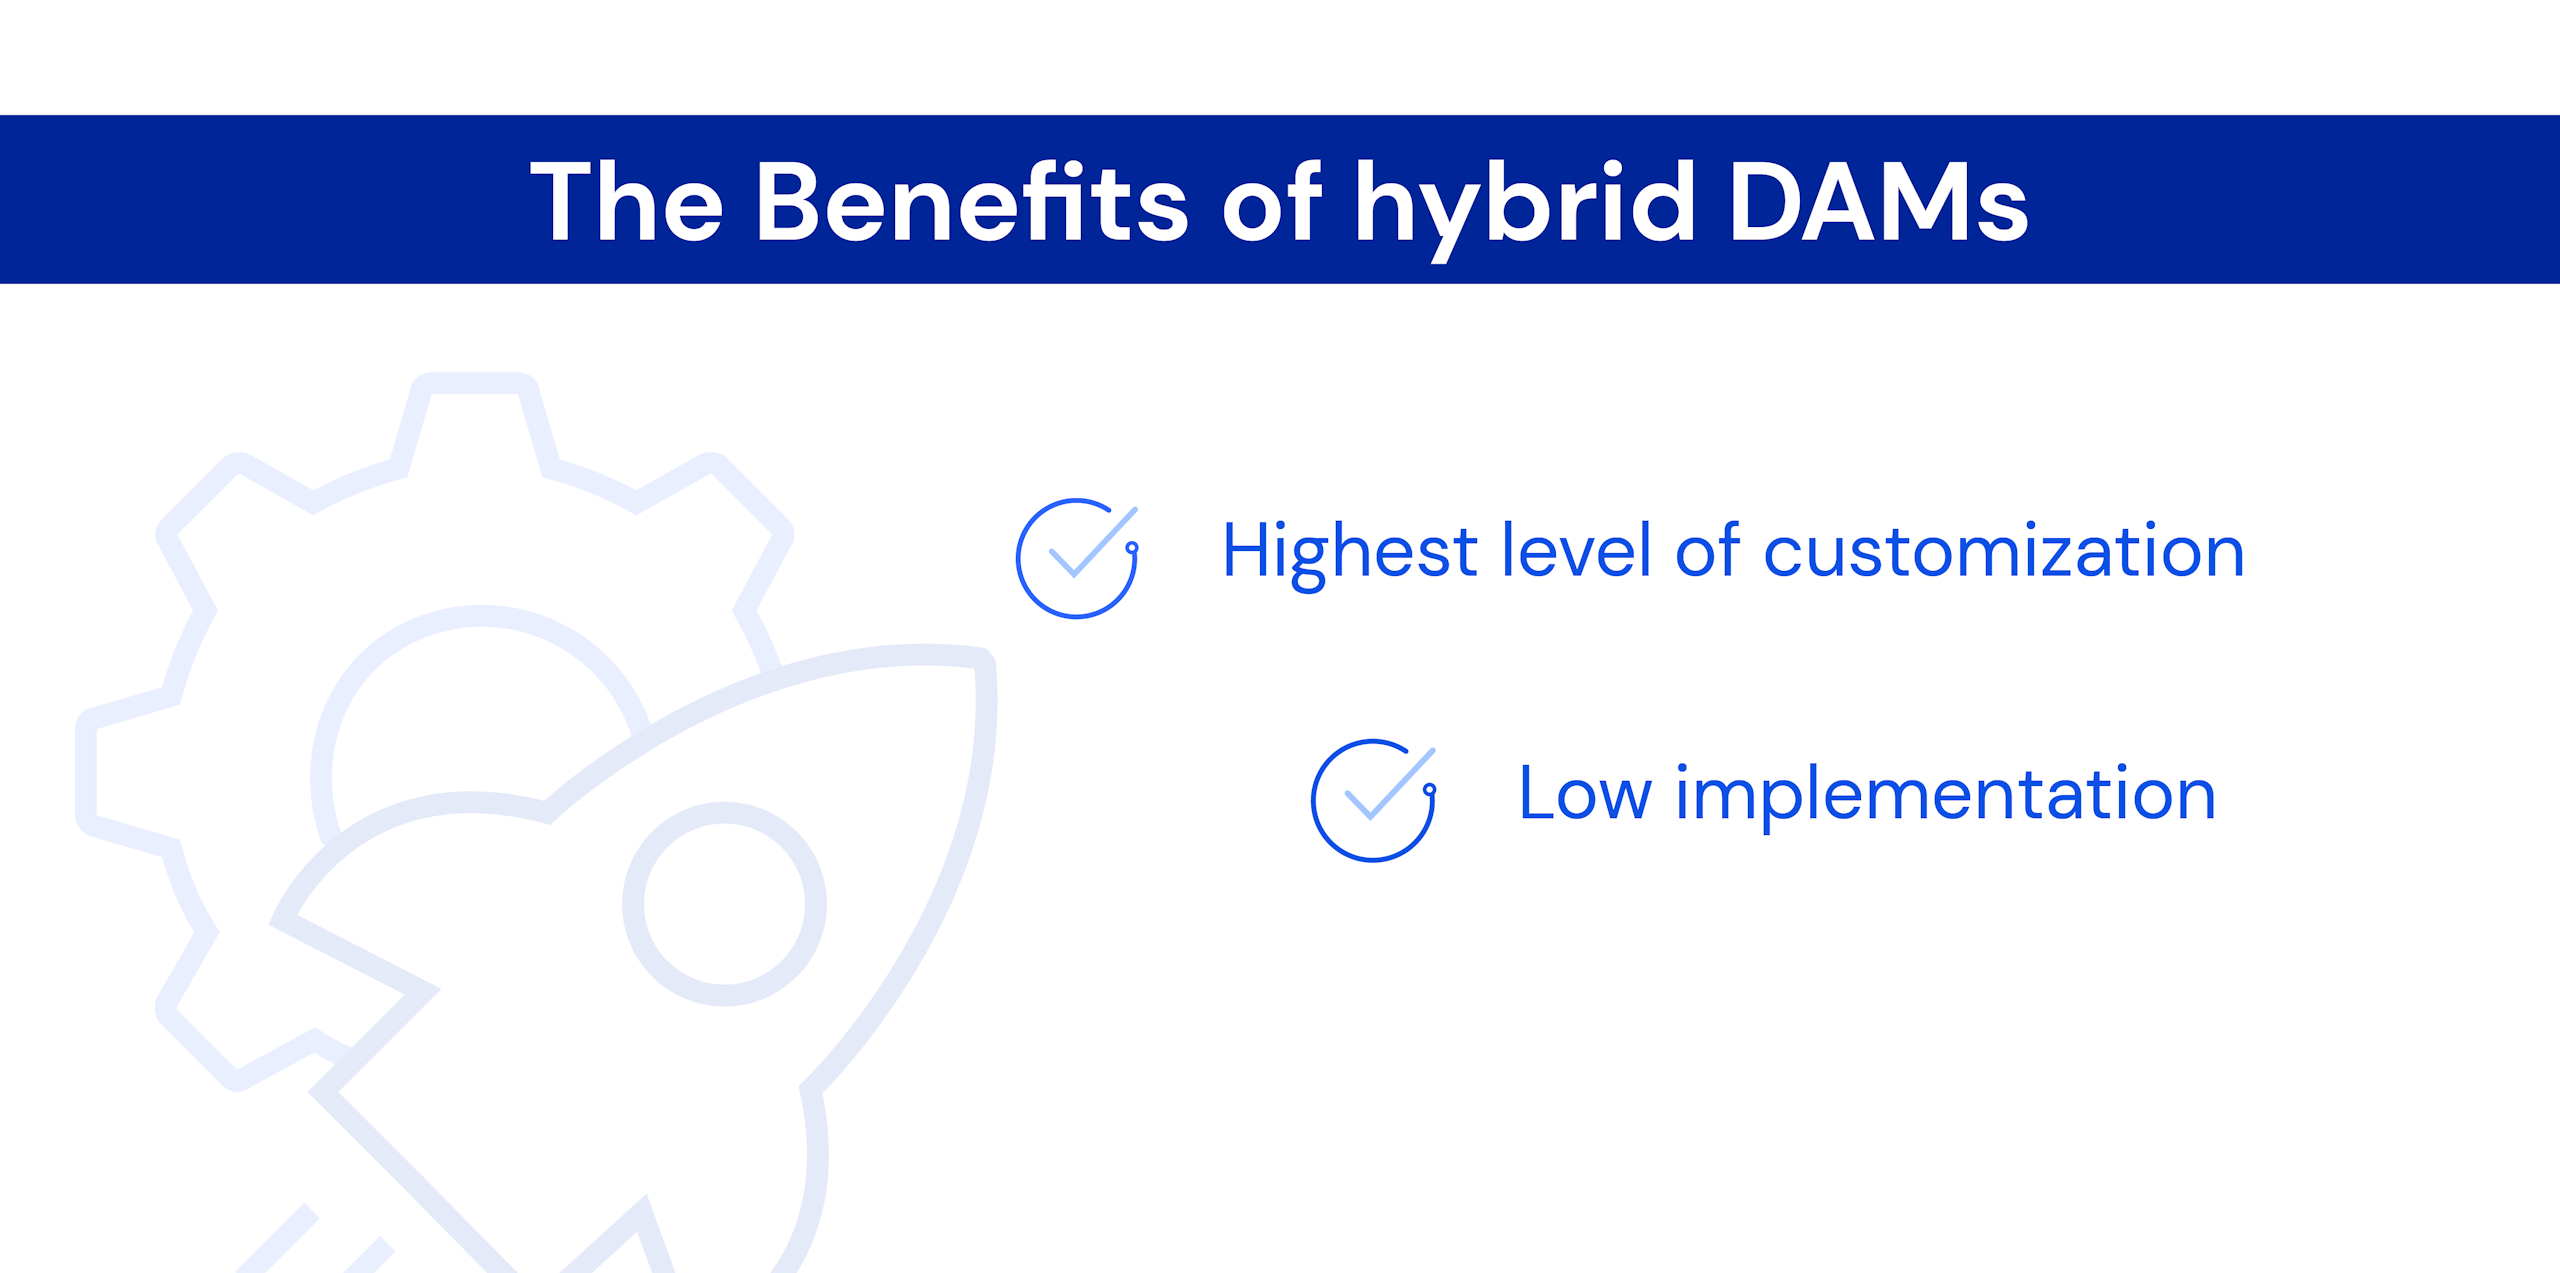 The benefits of hybrid DAMs